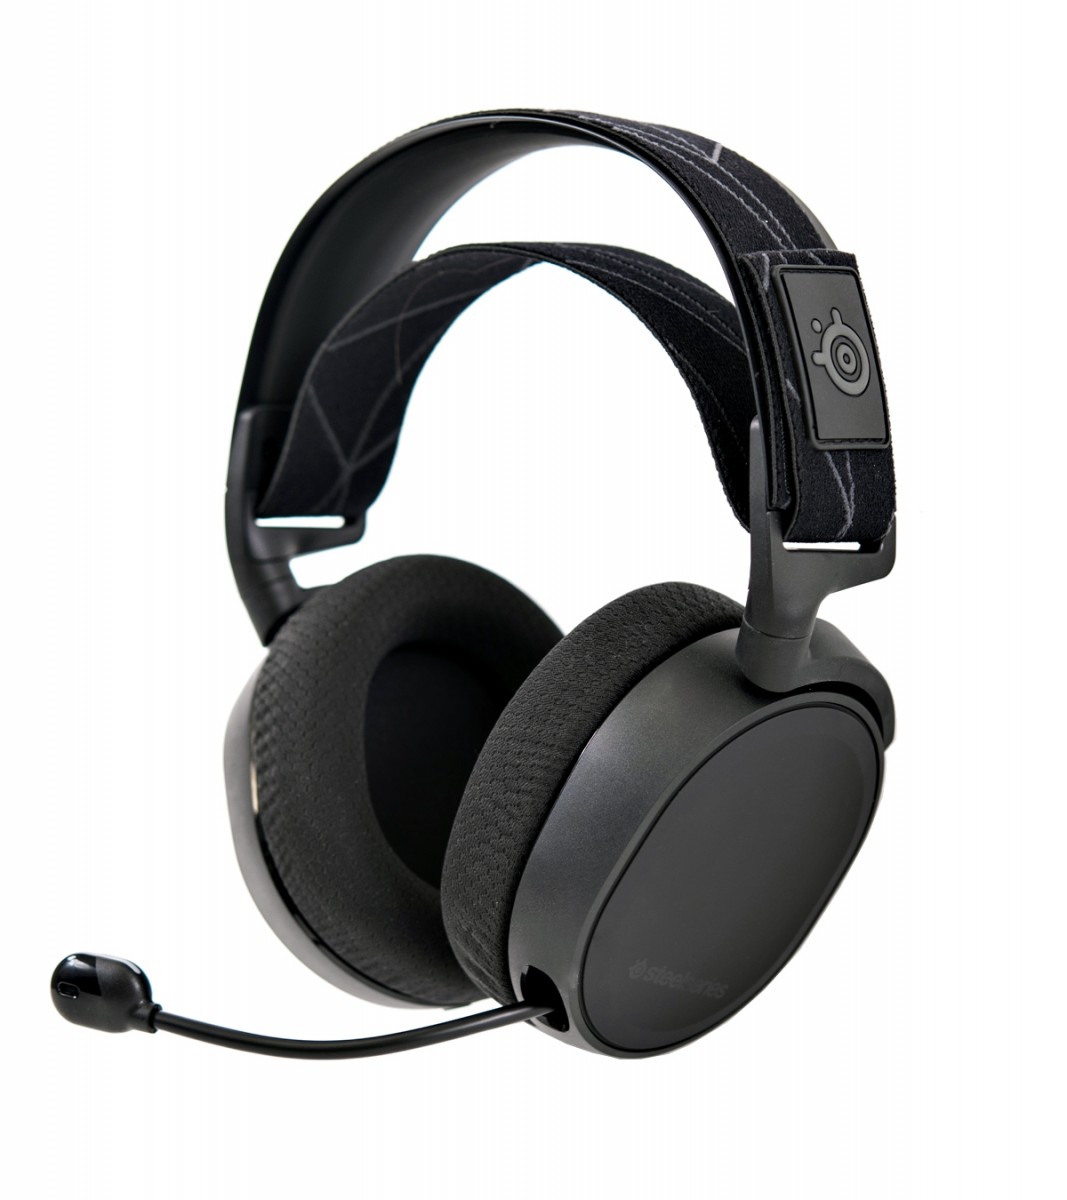 Black Steelseries Arctis 7 headphones